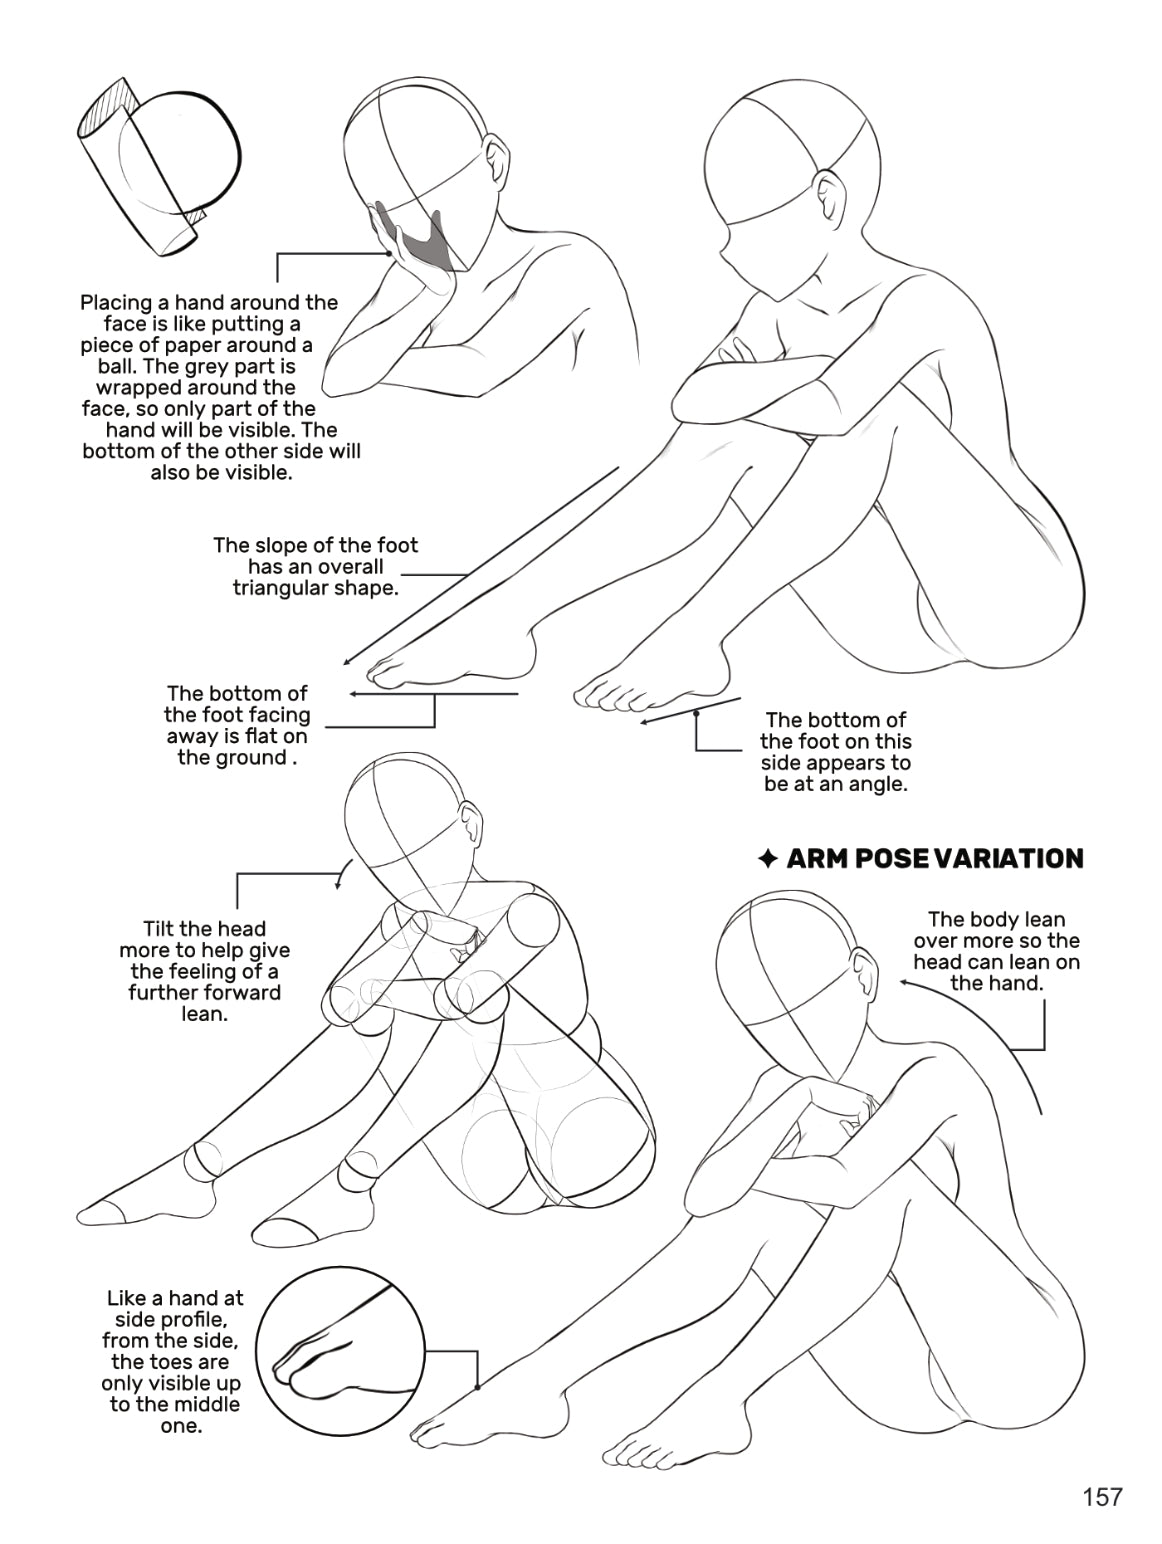 How to draw a Body - Upper Arm Anatomy (Armpit) - YouTube